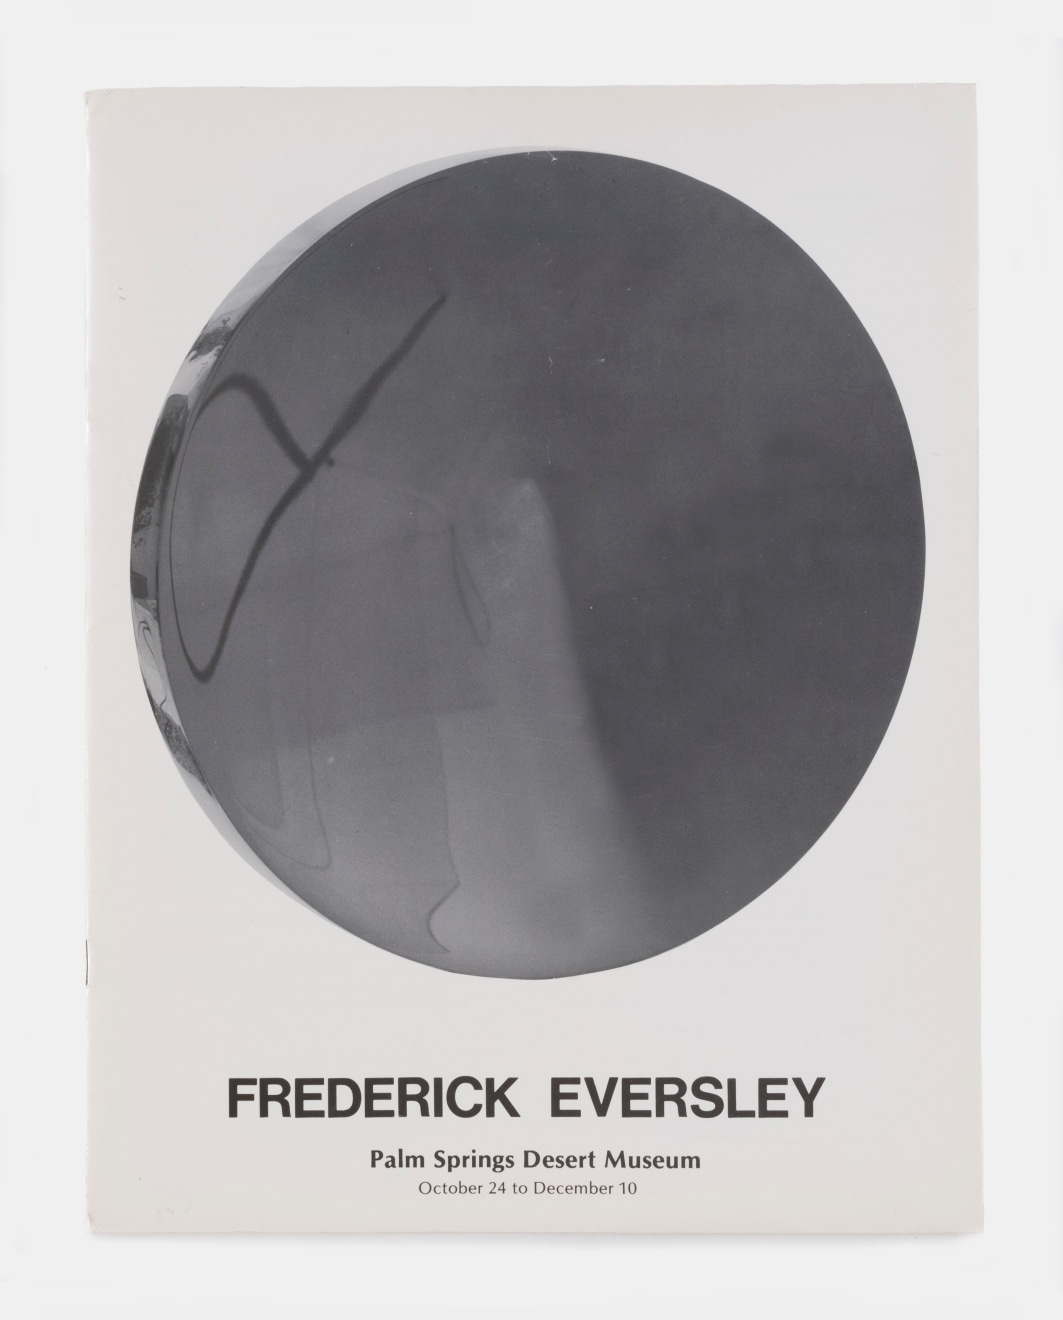 Fred Eversley